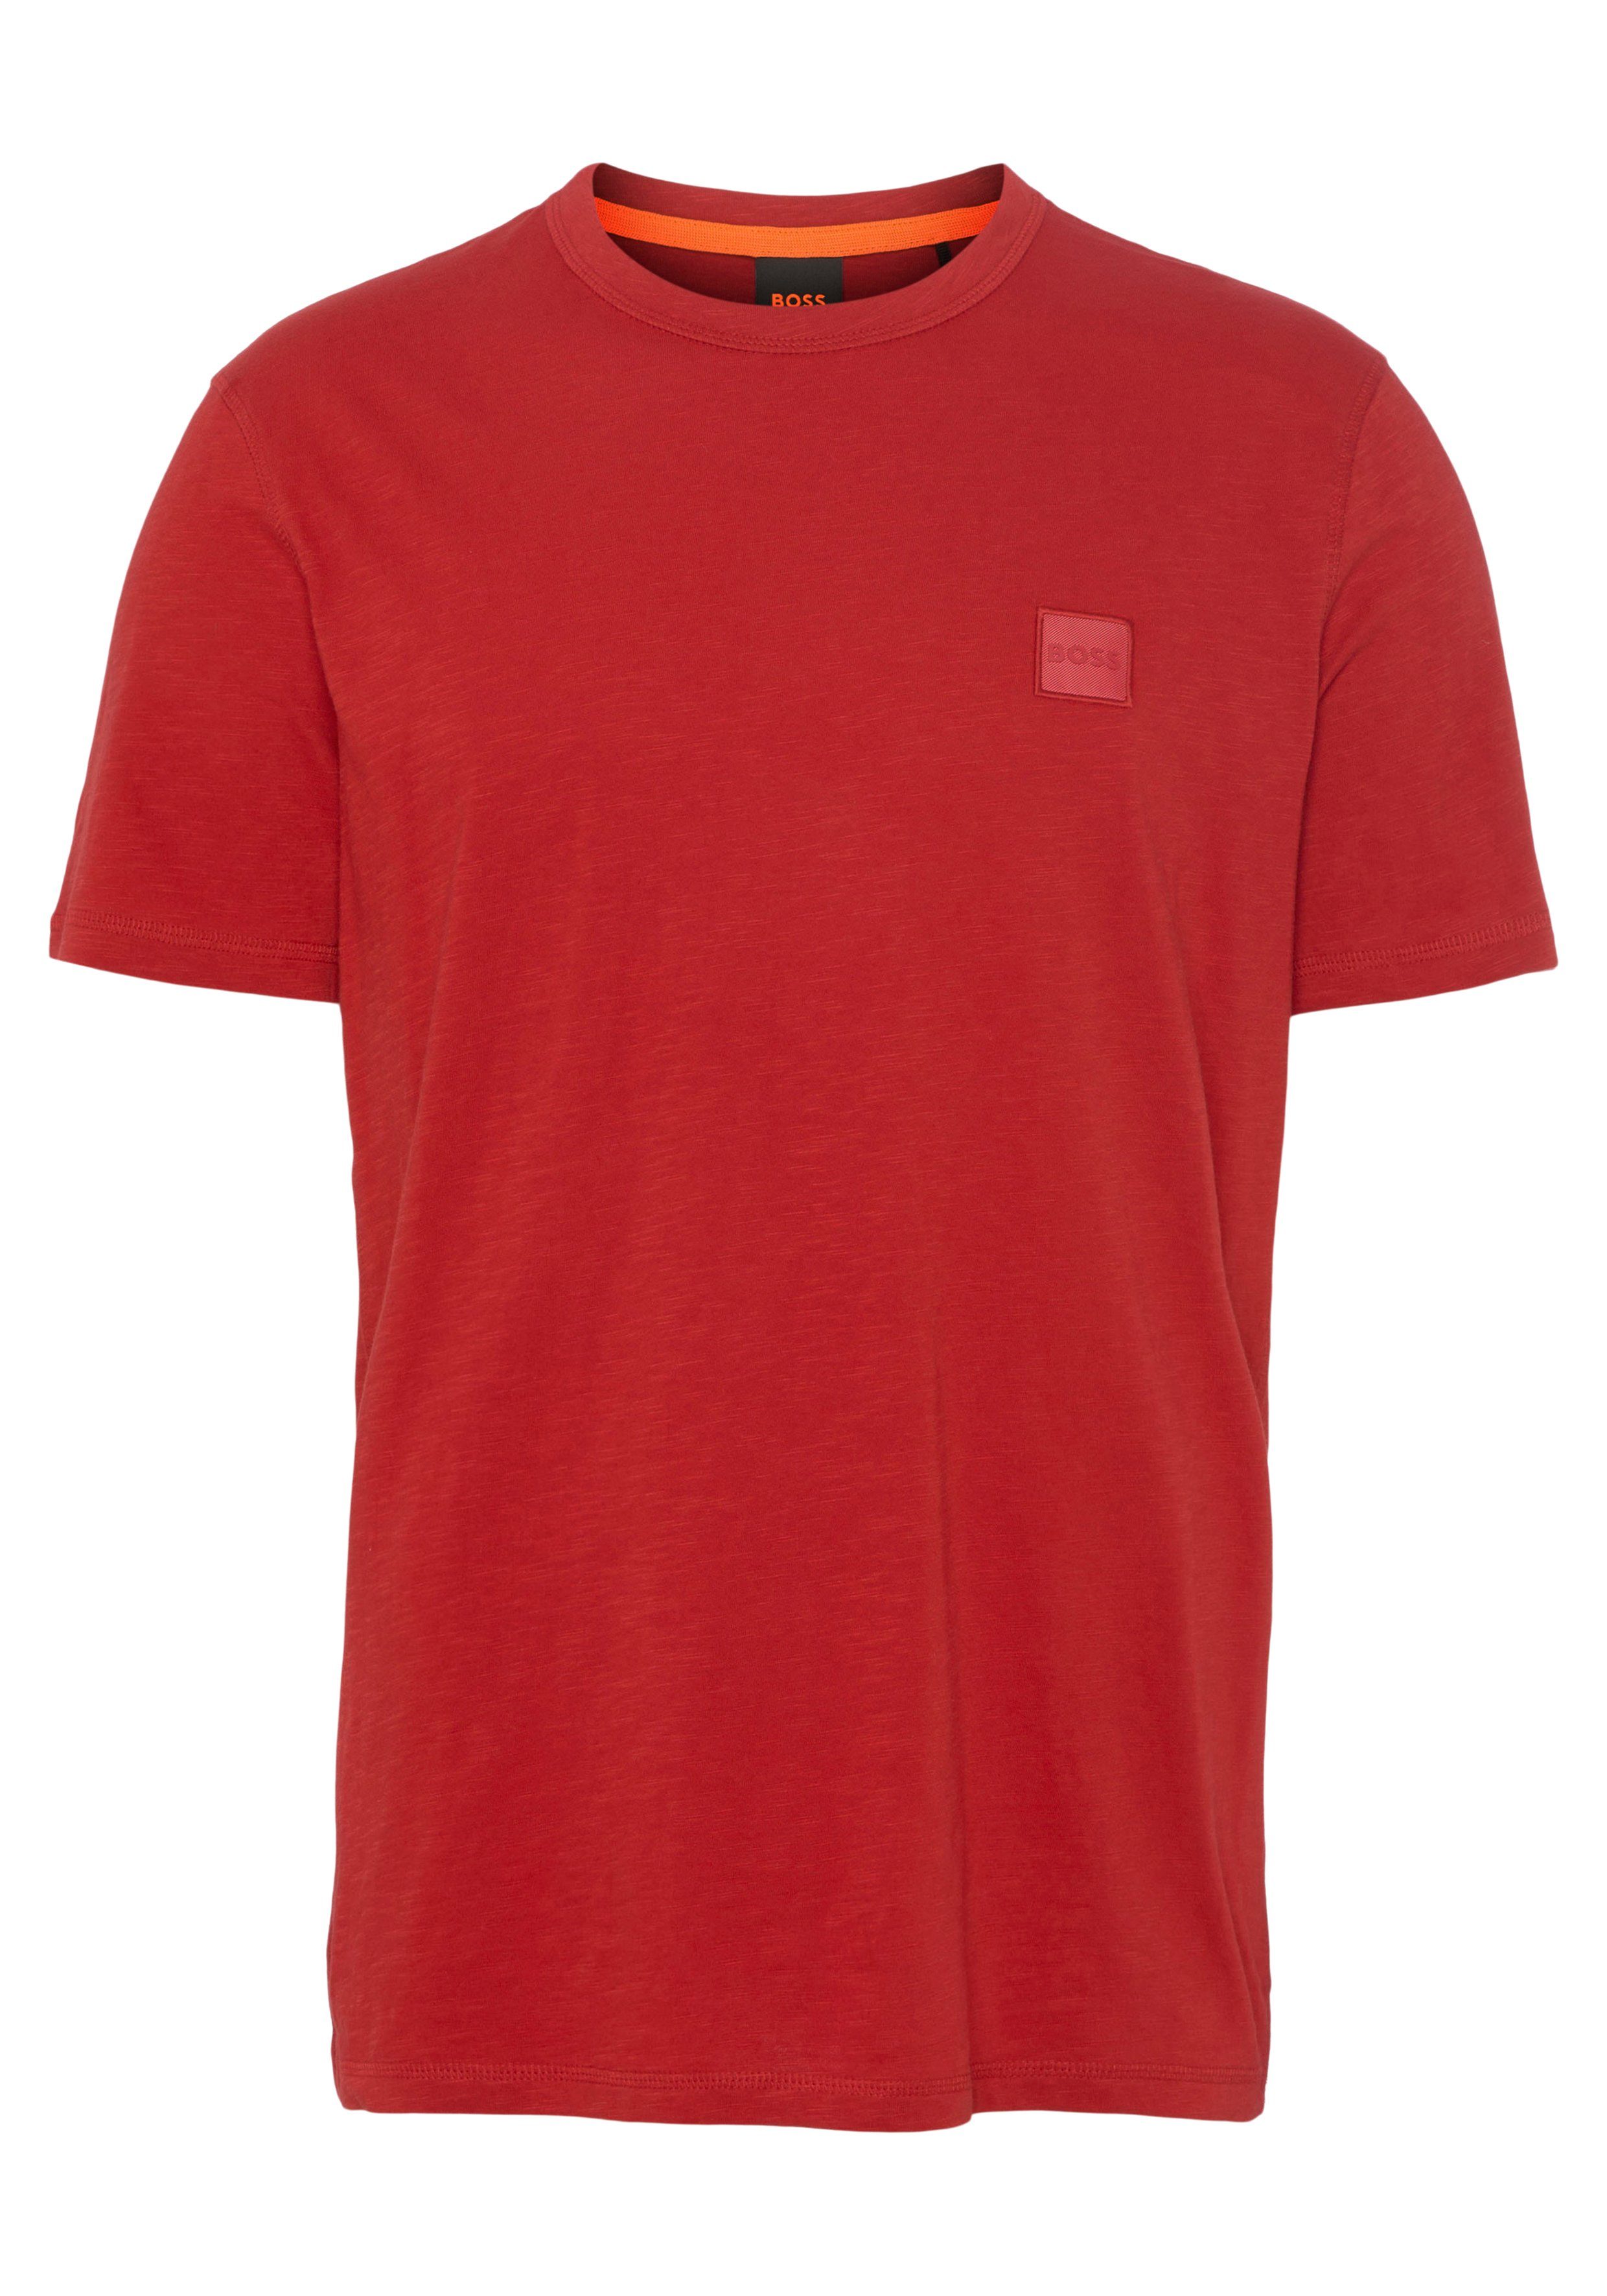 BOSS ORANGE Tegood mit Overlock-Nähten verziert T-Shirt bright_red (Packung)